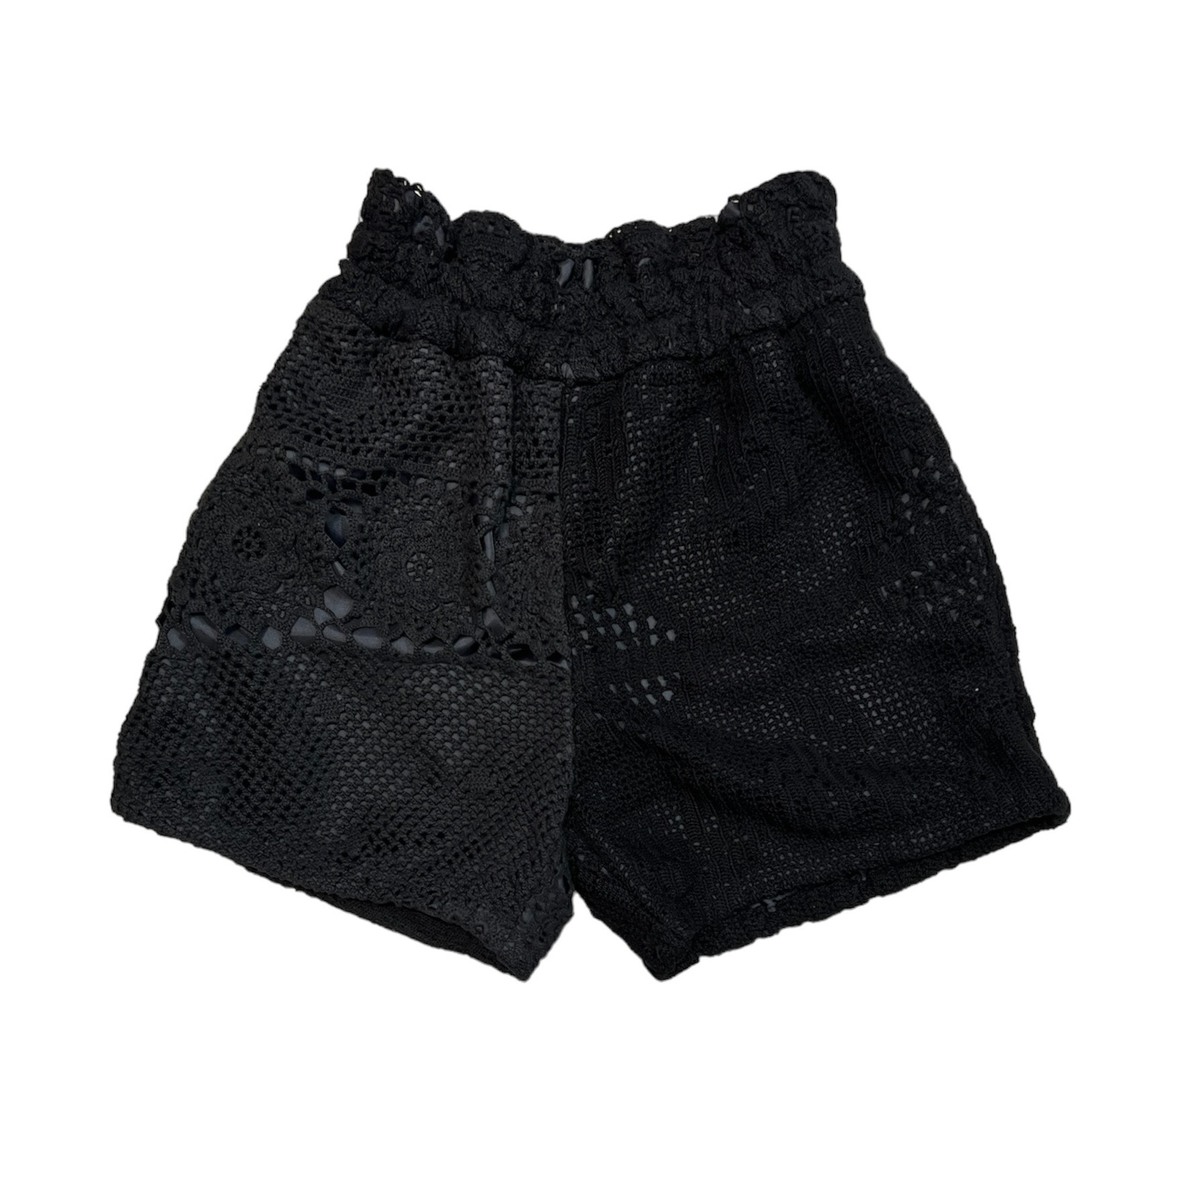 77 circa circa make antique lace patchwork shorts -black 1